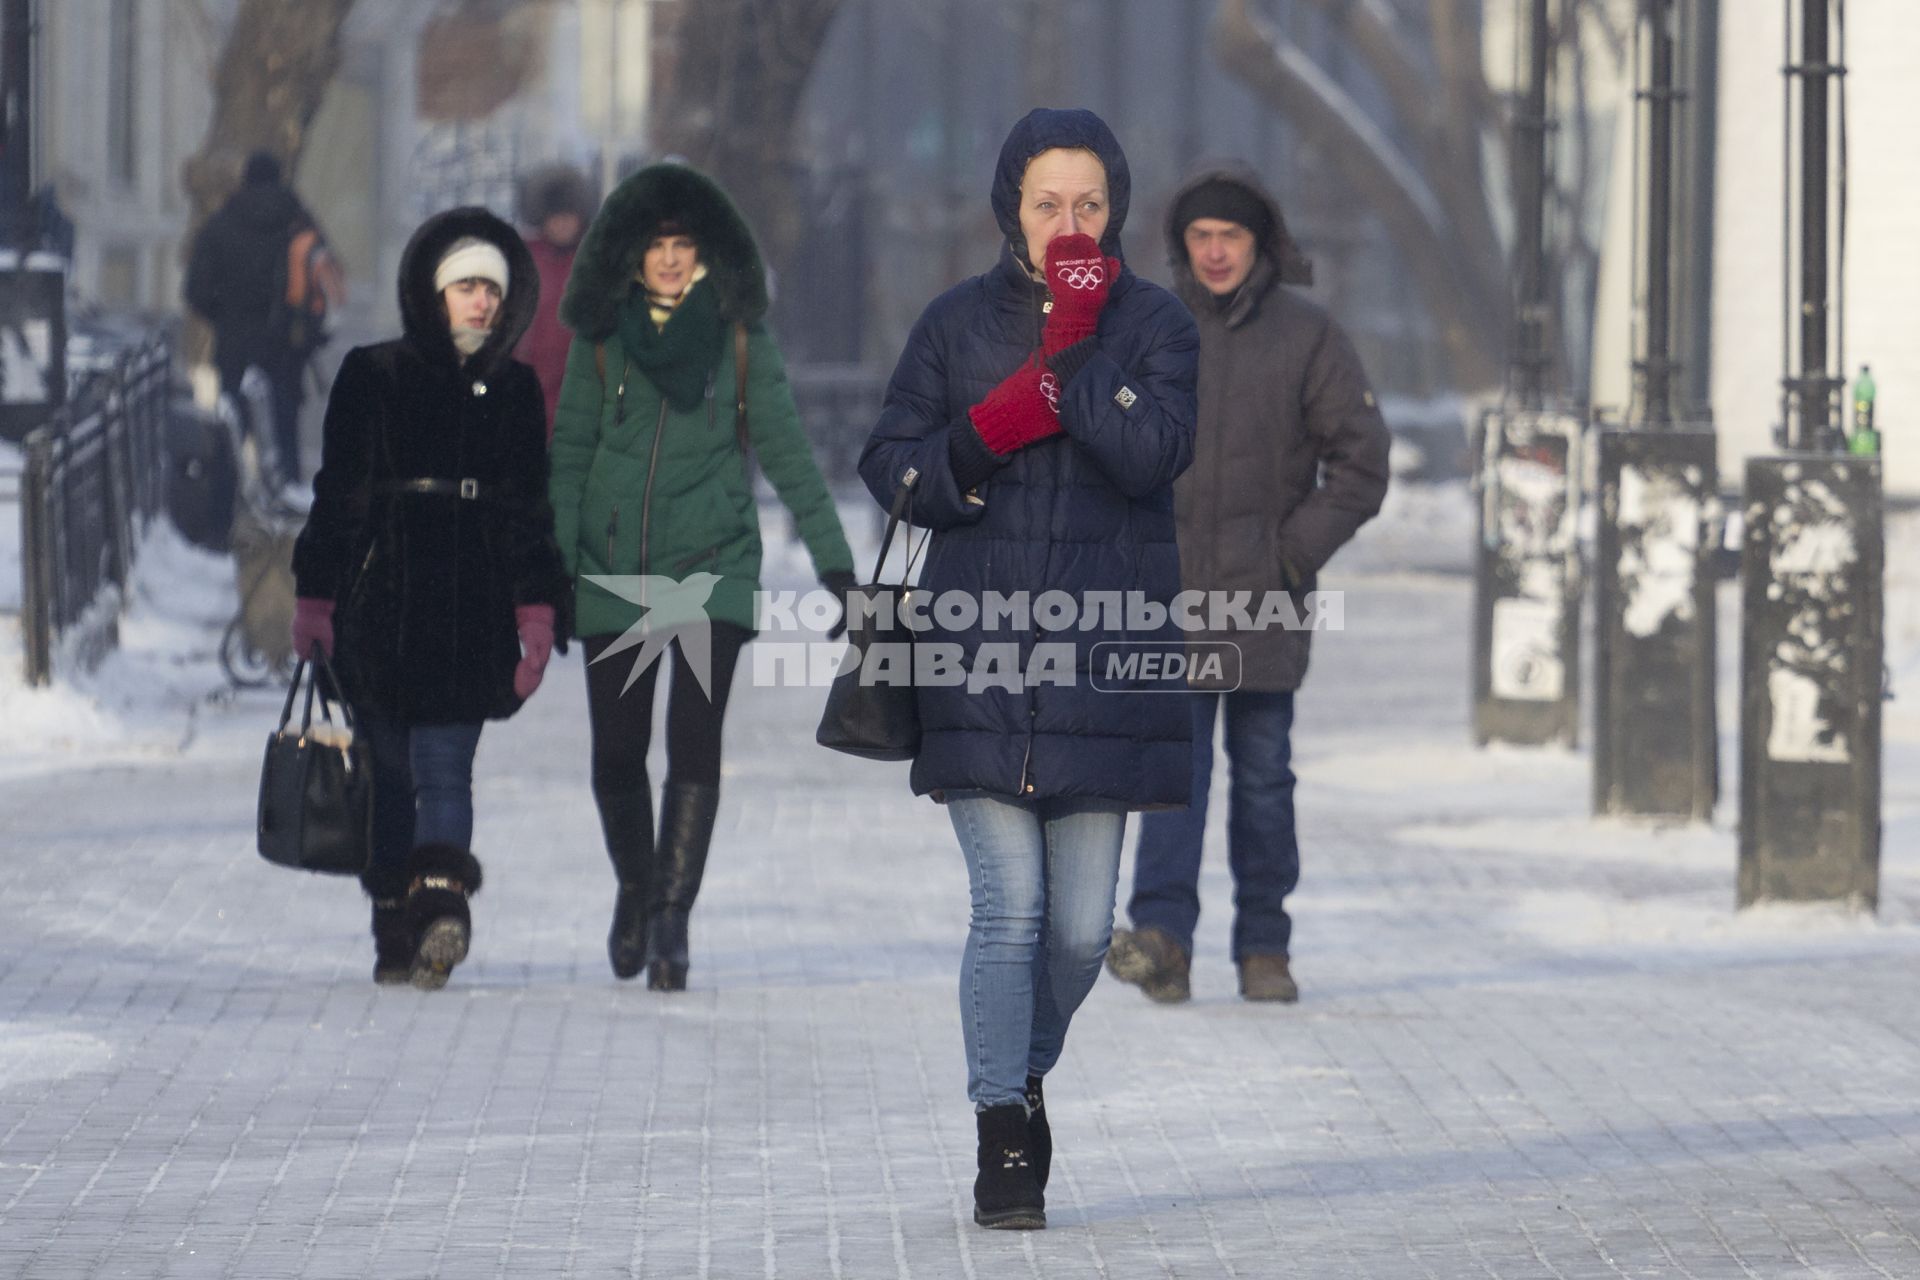 Иркутск. Жители города на улице.